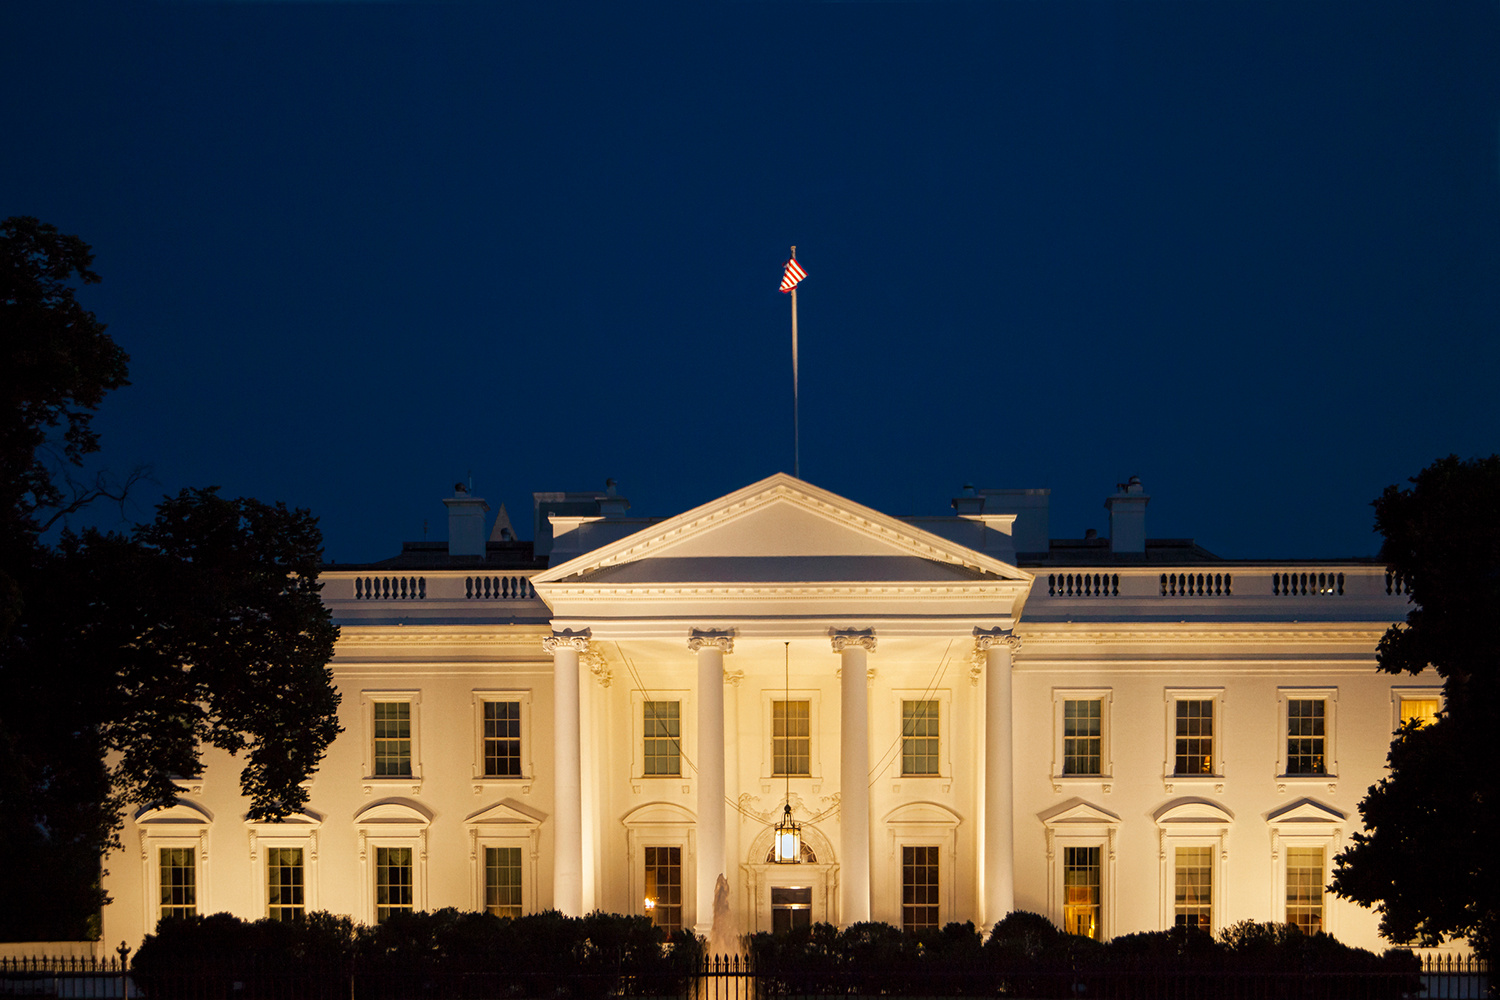 USA White House lit up at night